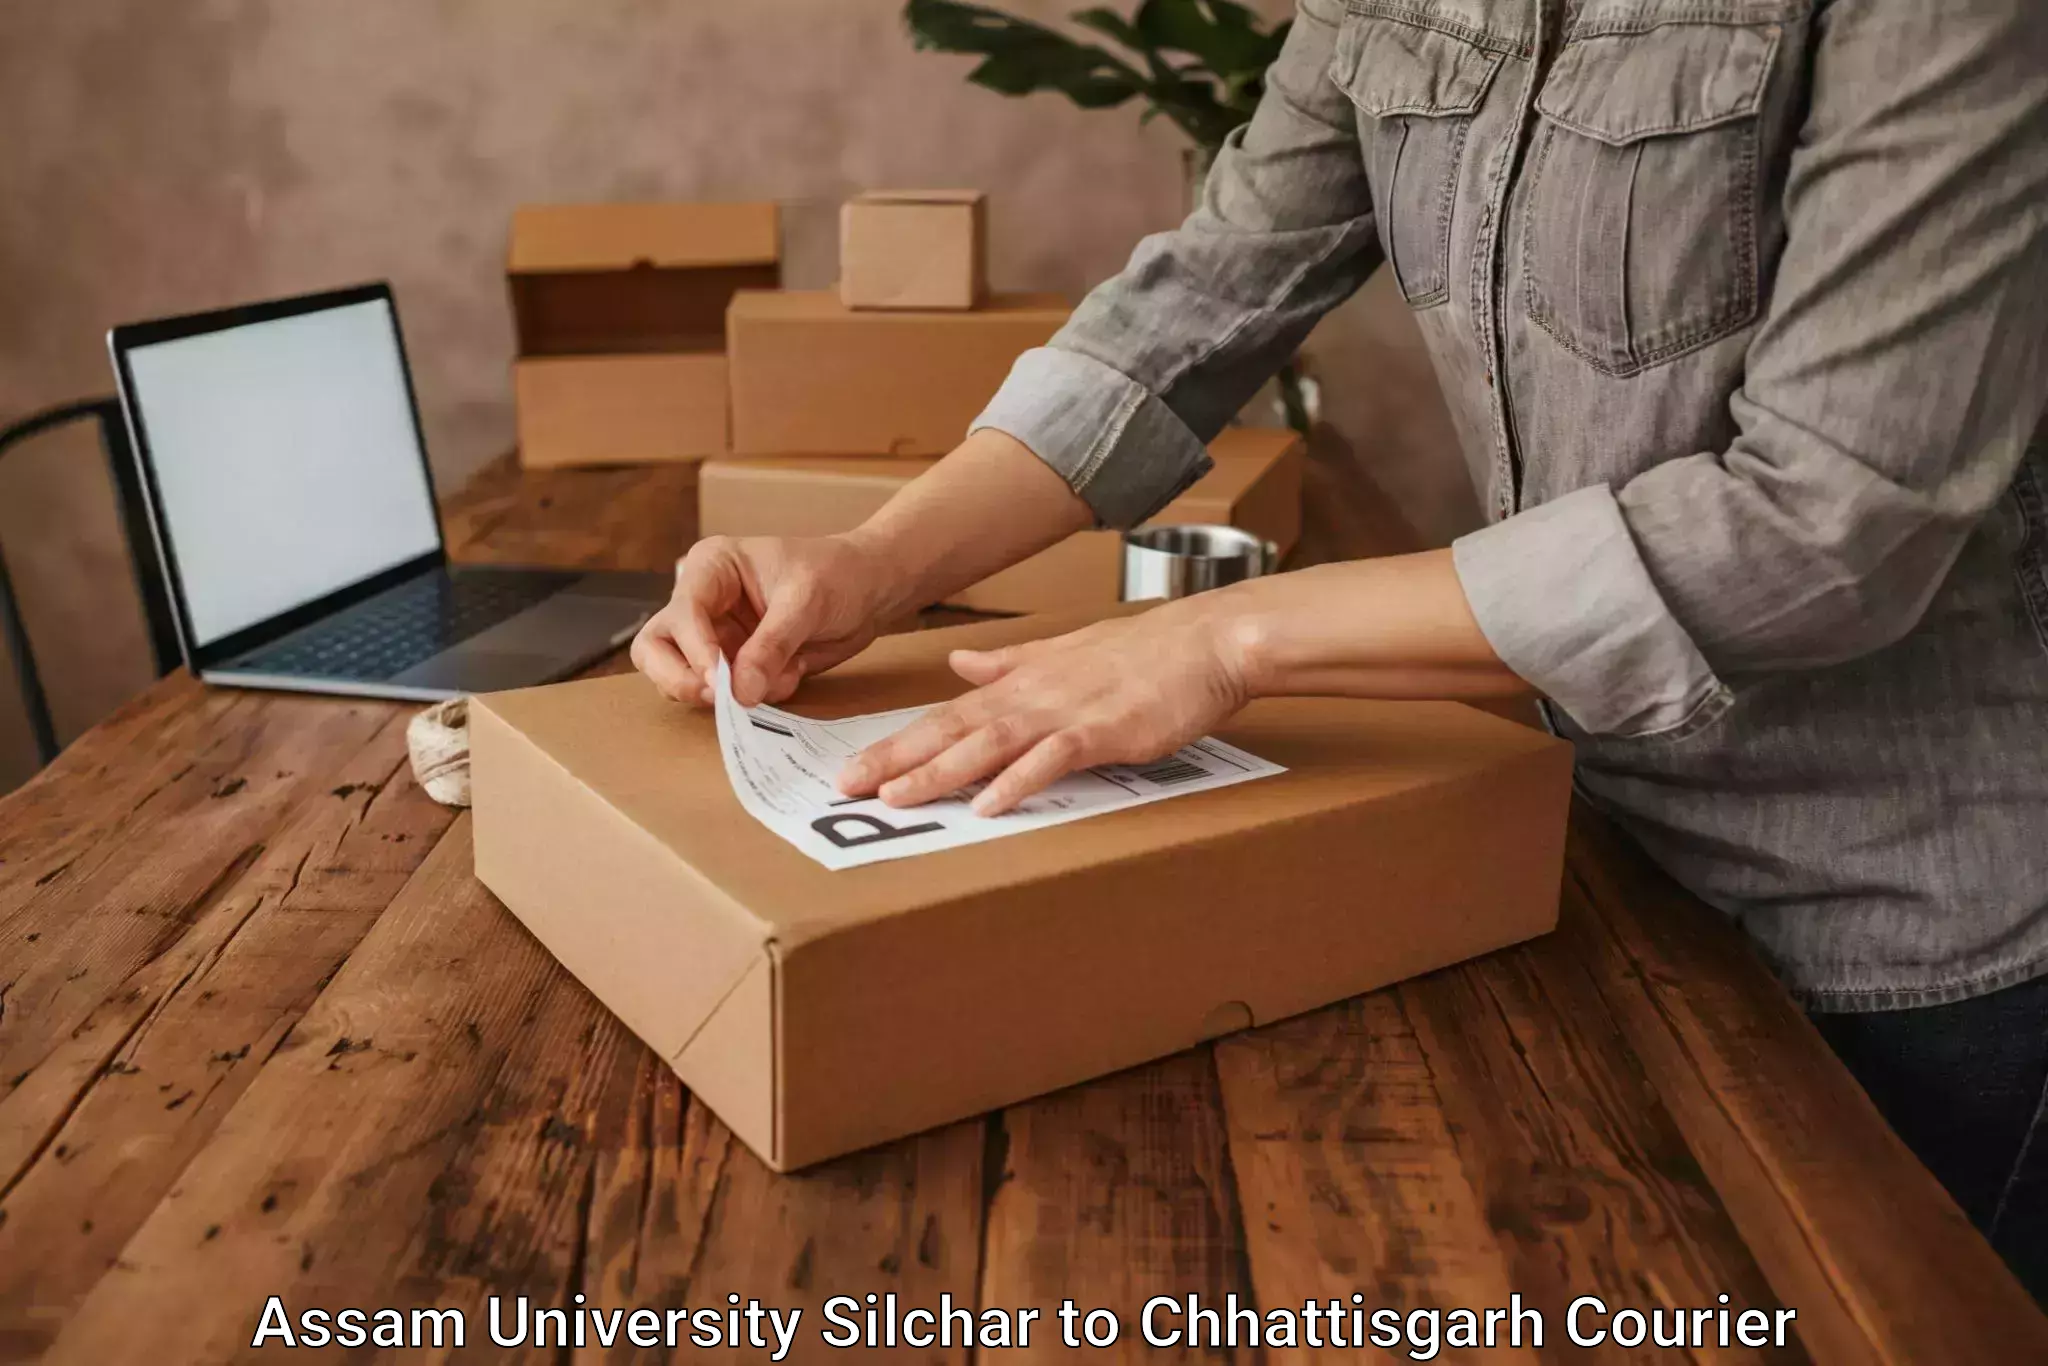 Digital courier platforms Assam University Silchar to Chhattisgarh